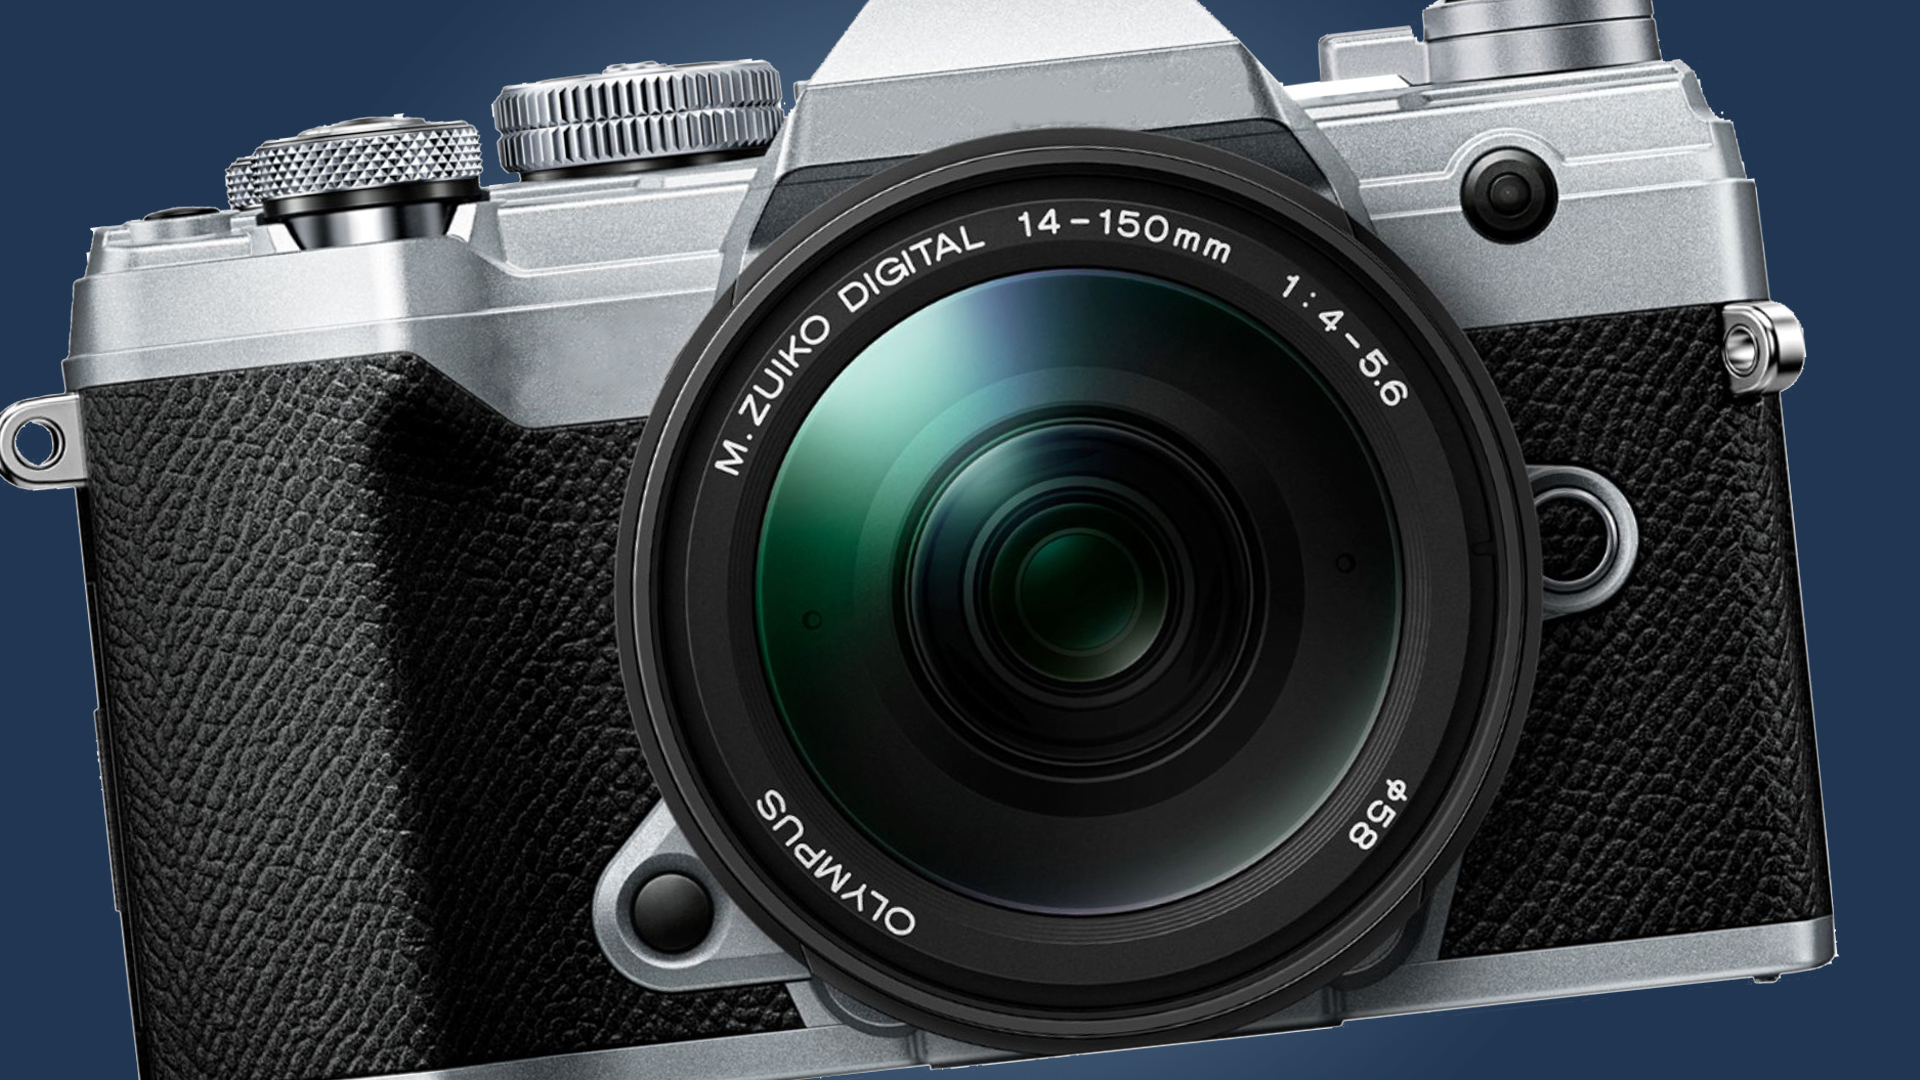 Olympus E-M5 Mark III camera against a blue background